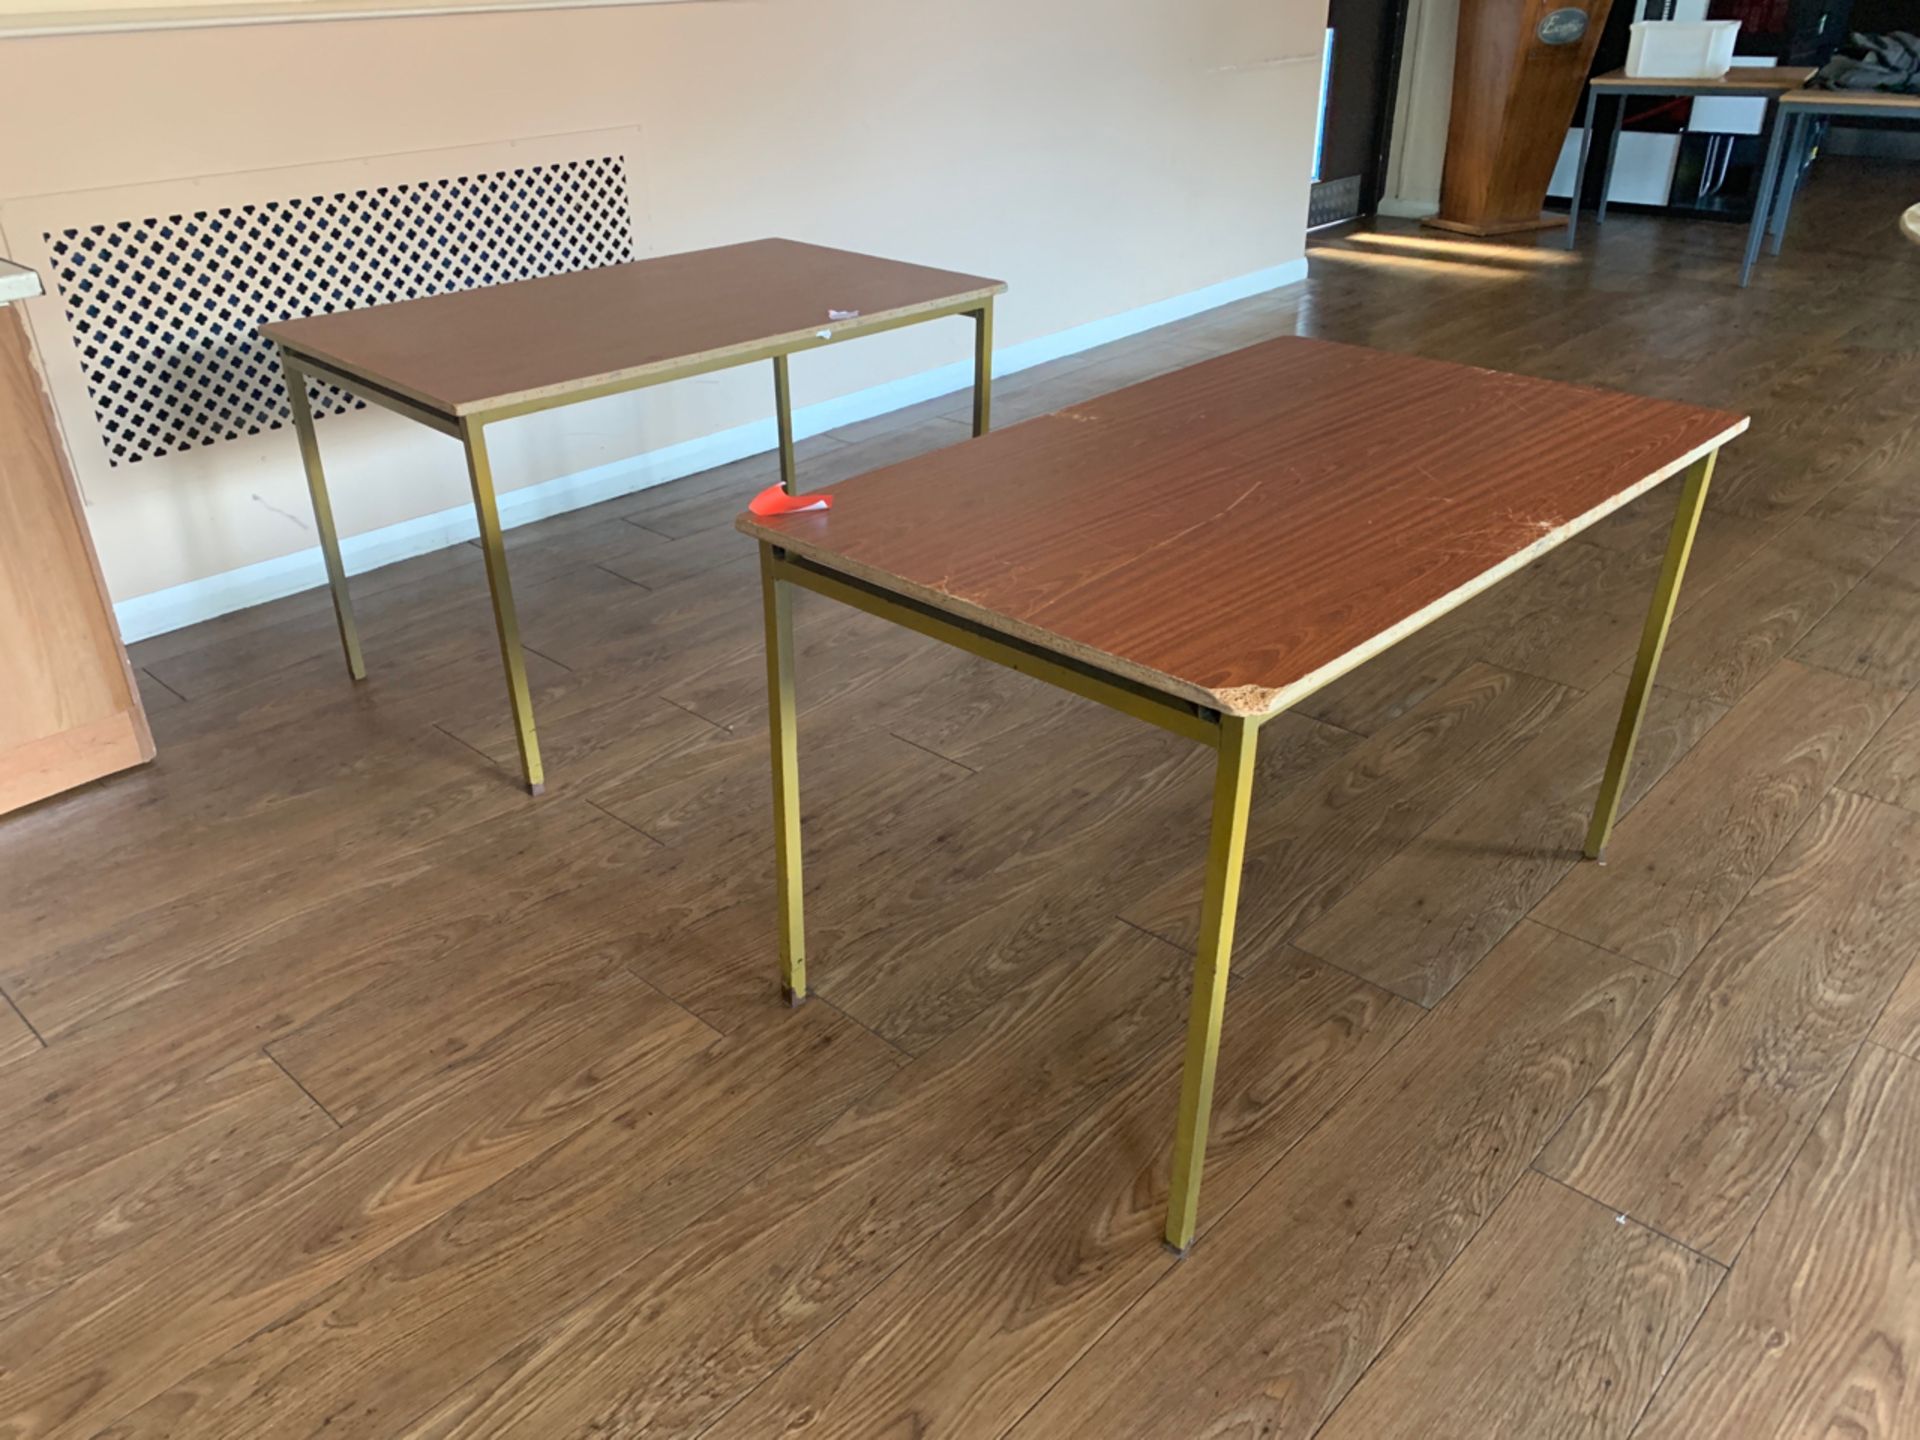 Set of 4 Rectangular Tables on Metal Frame - Image 4 of 6